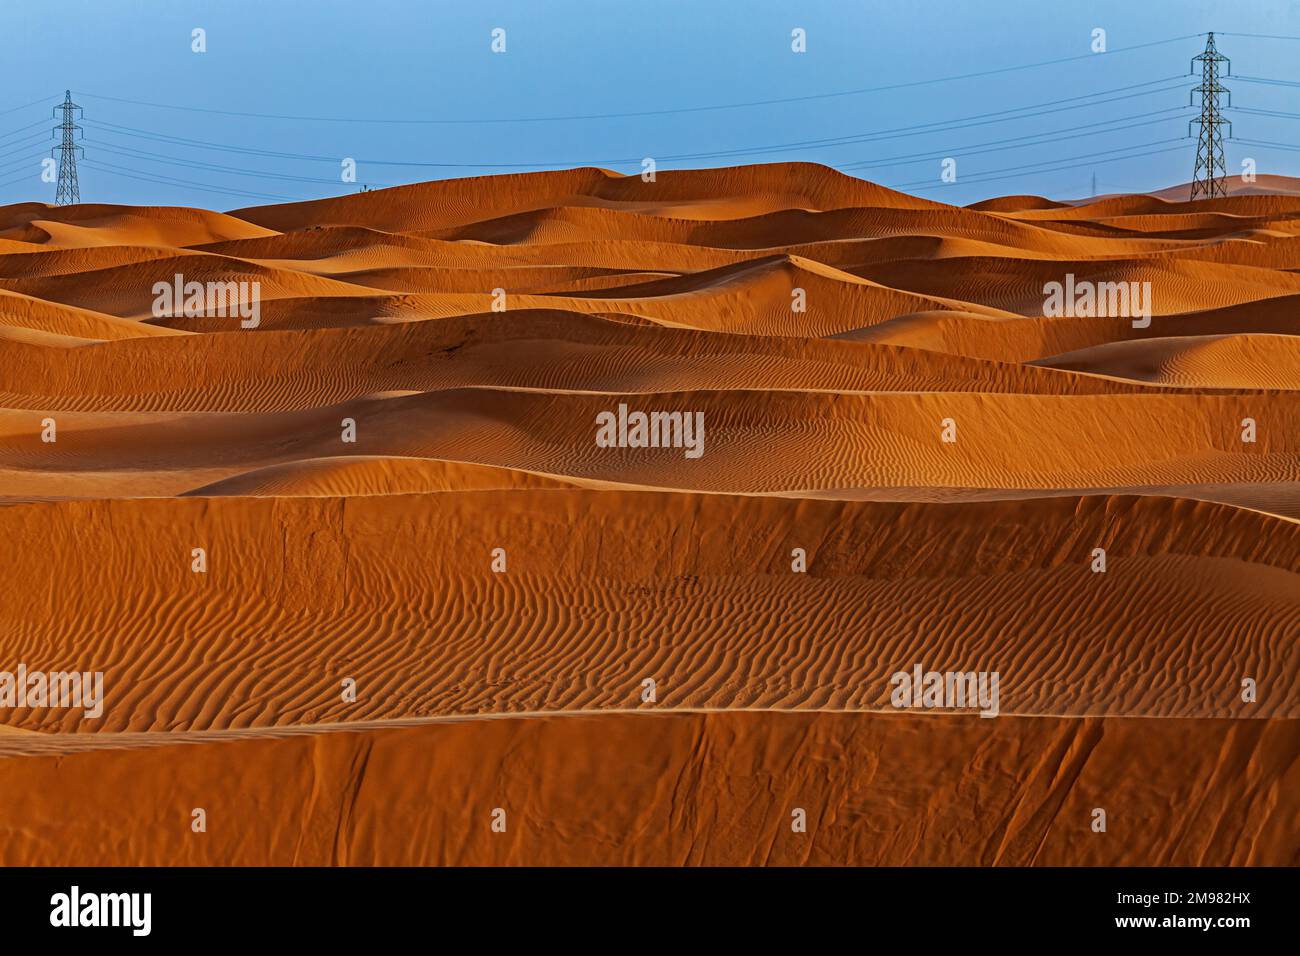 Electricity pylons and Sand dunes in desert landscape, Saudi Arabia Stock Photo